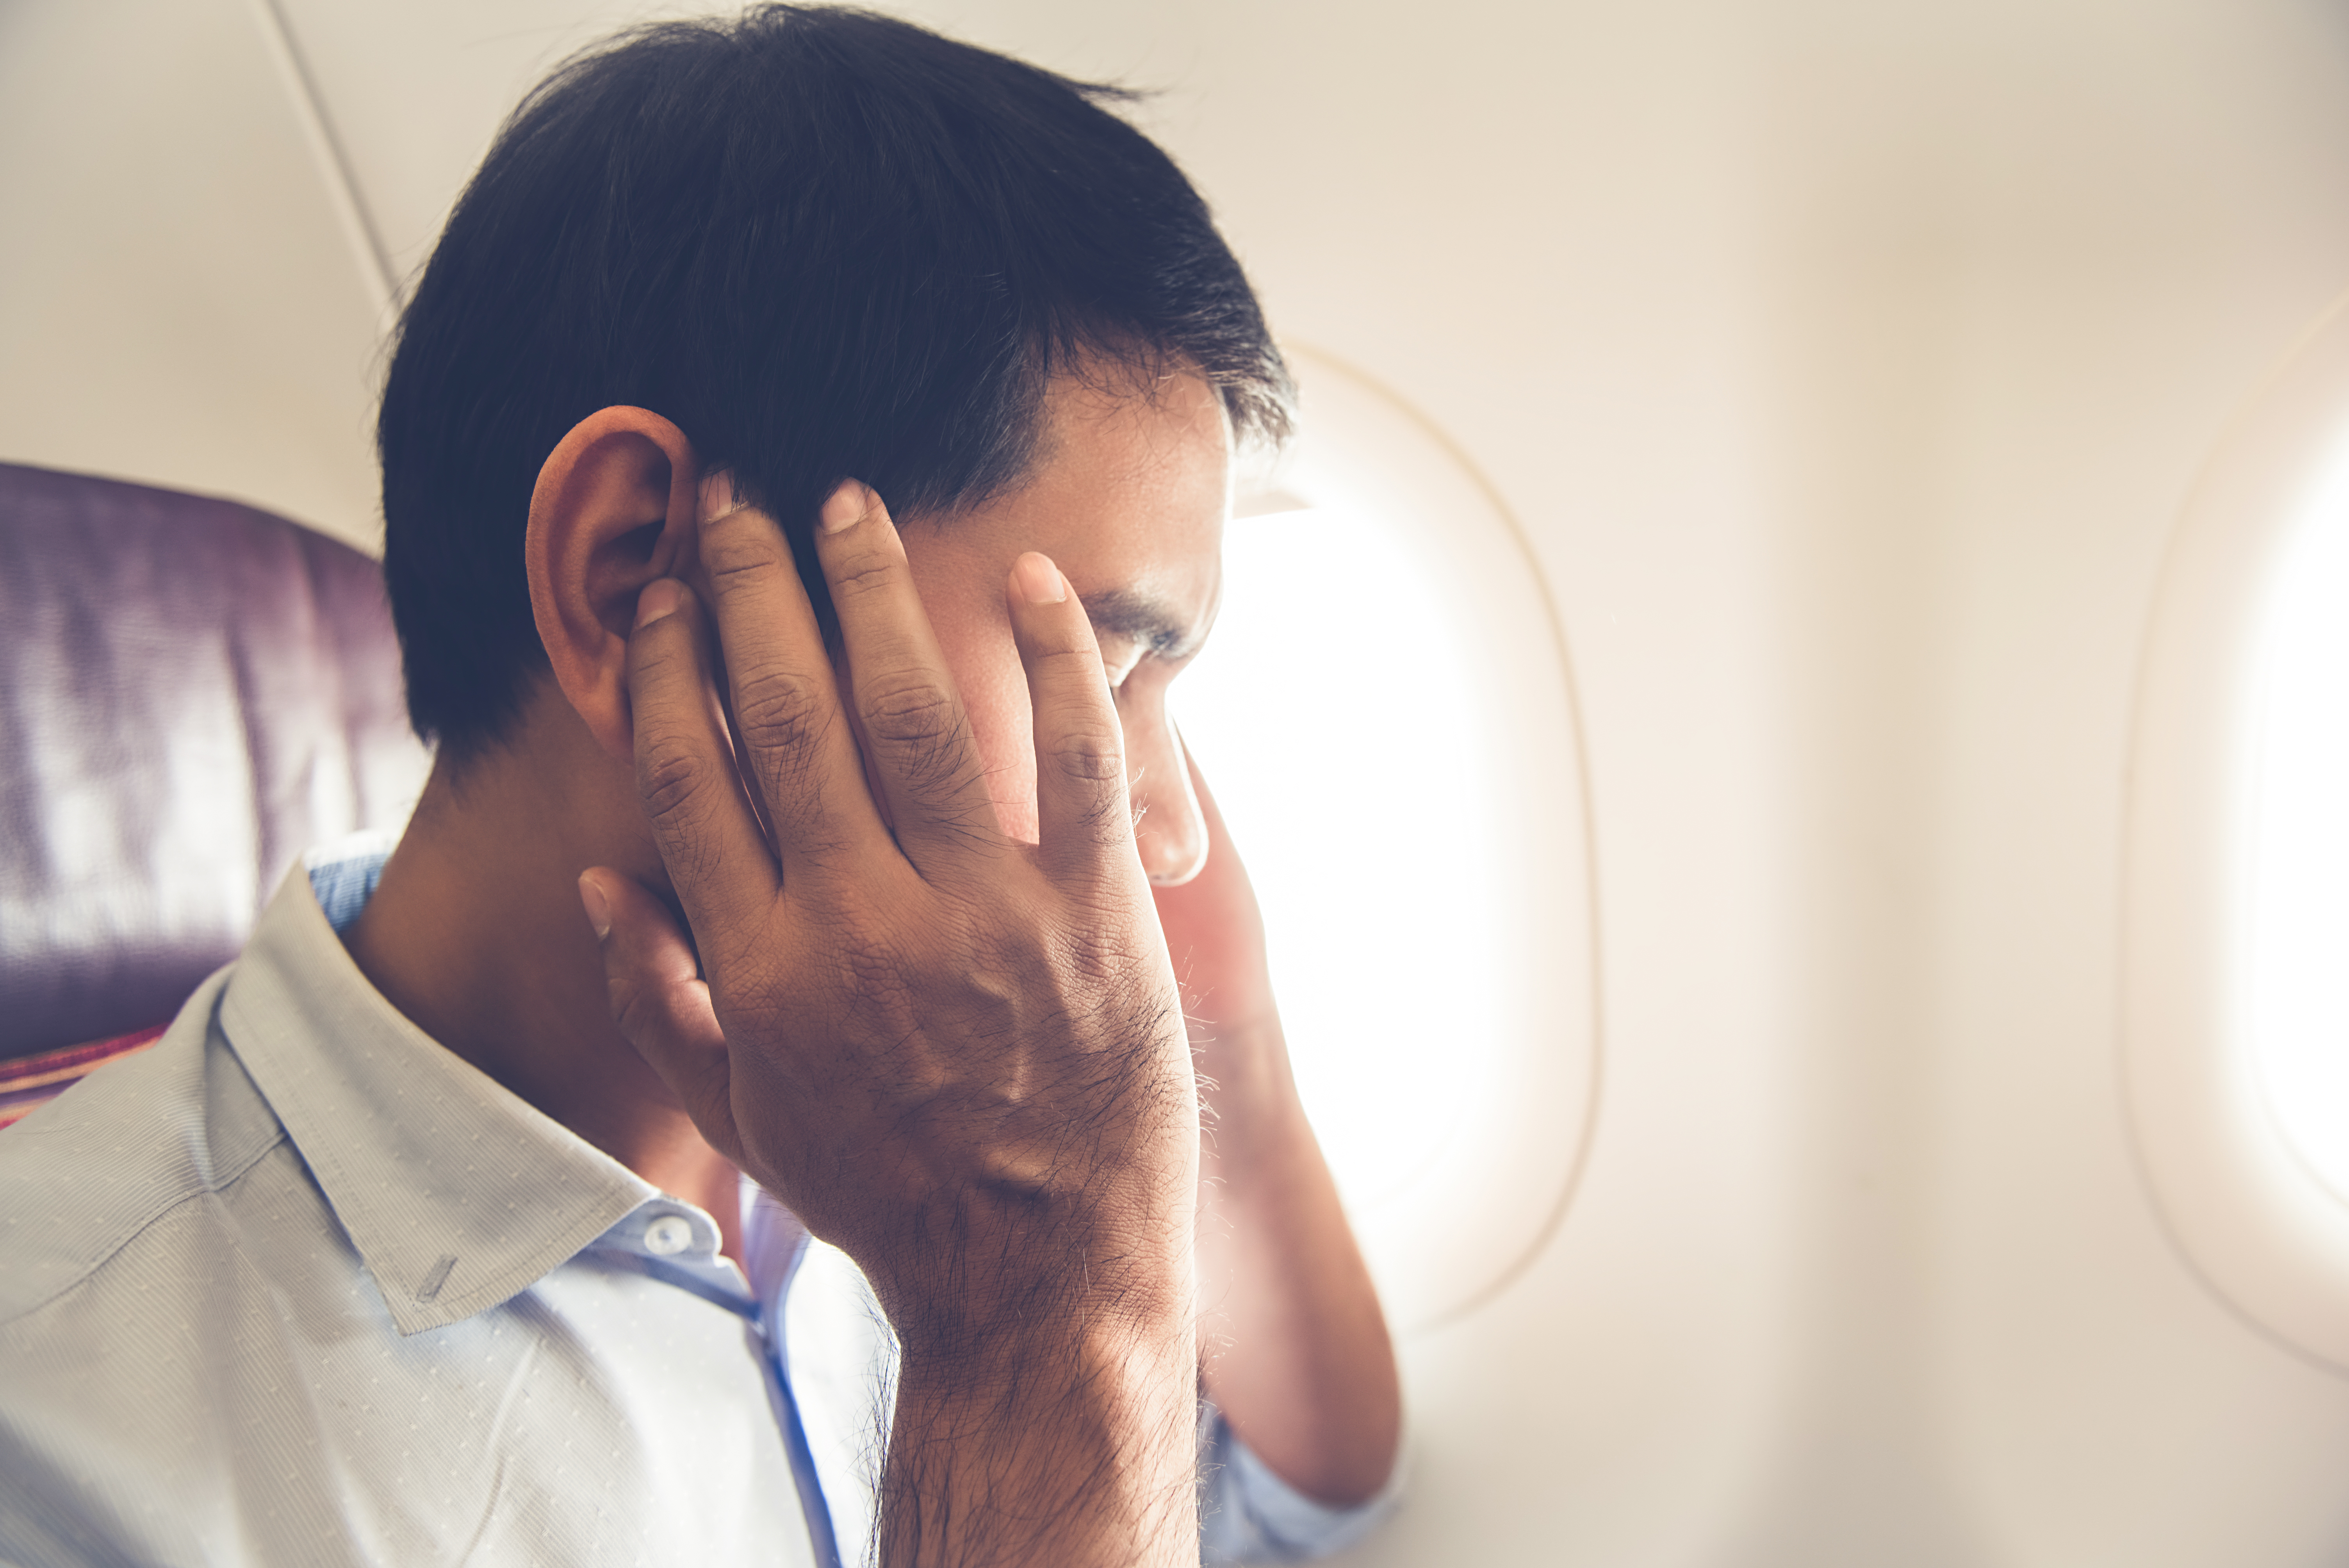 Un passager d'avion frustré | Source : Shutterstock